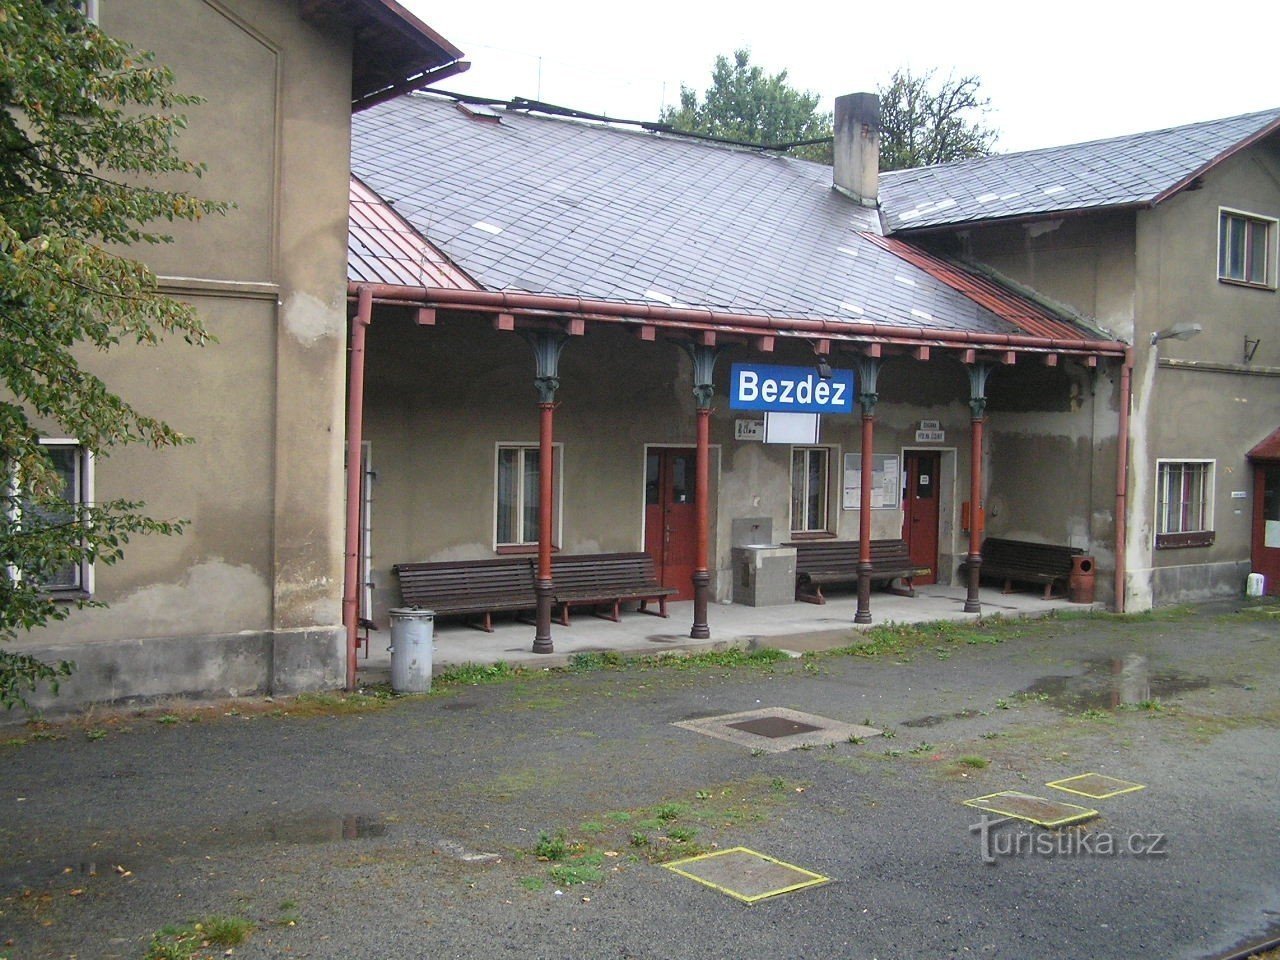 Željeznička stanica Bezděz